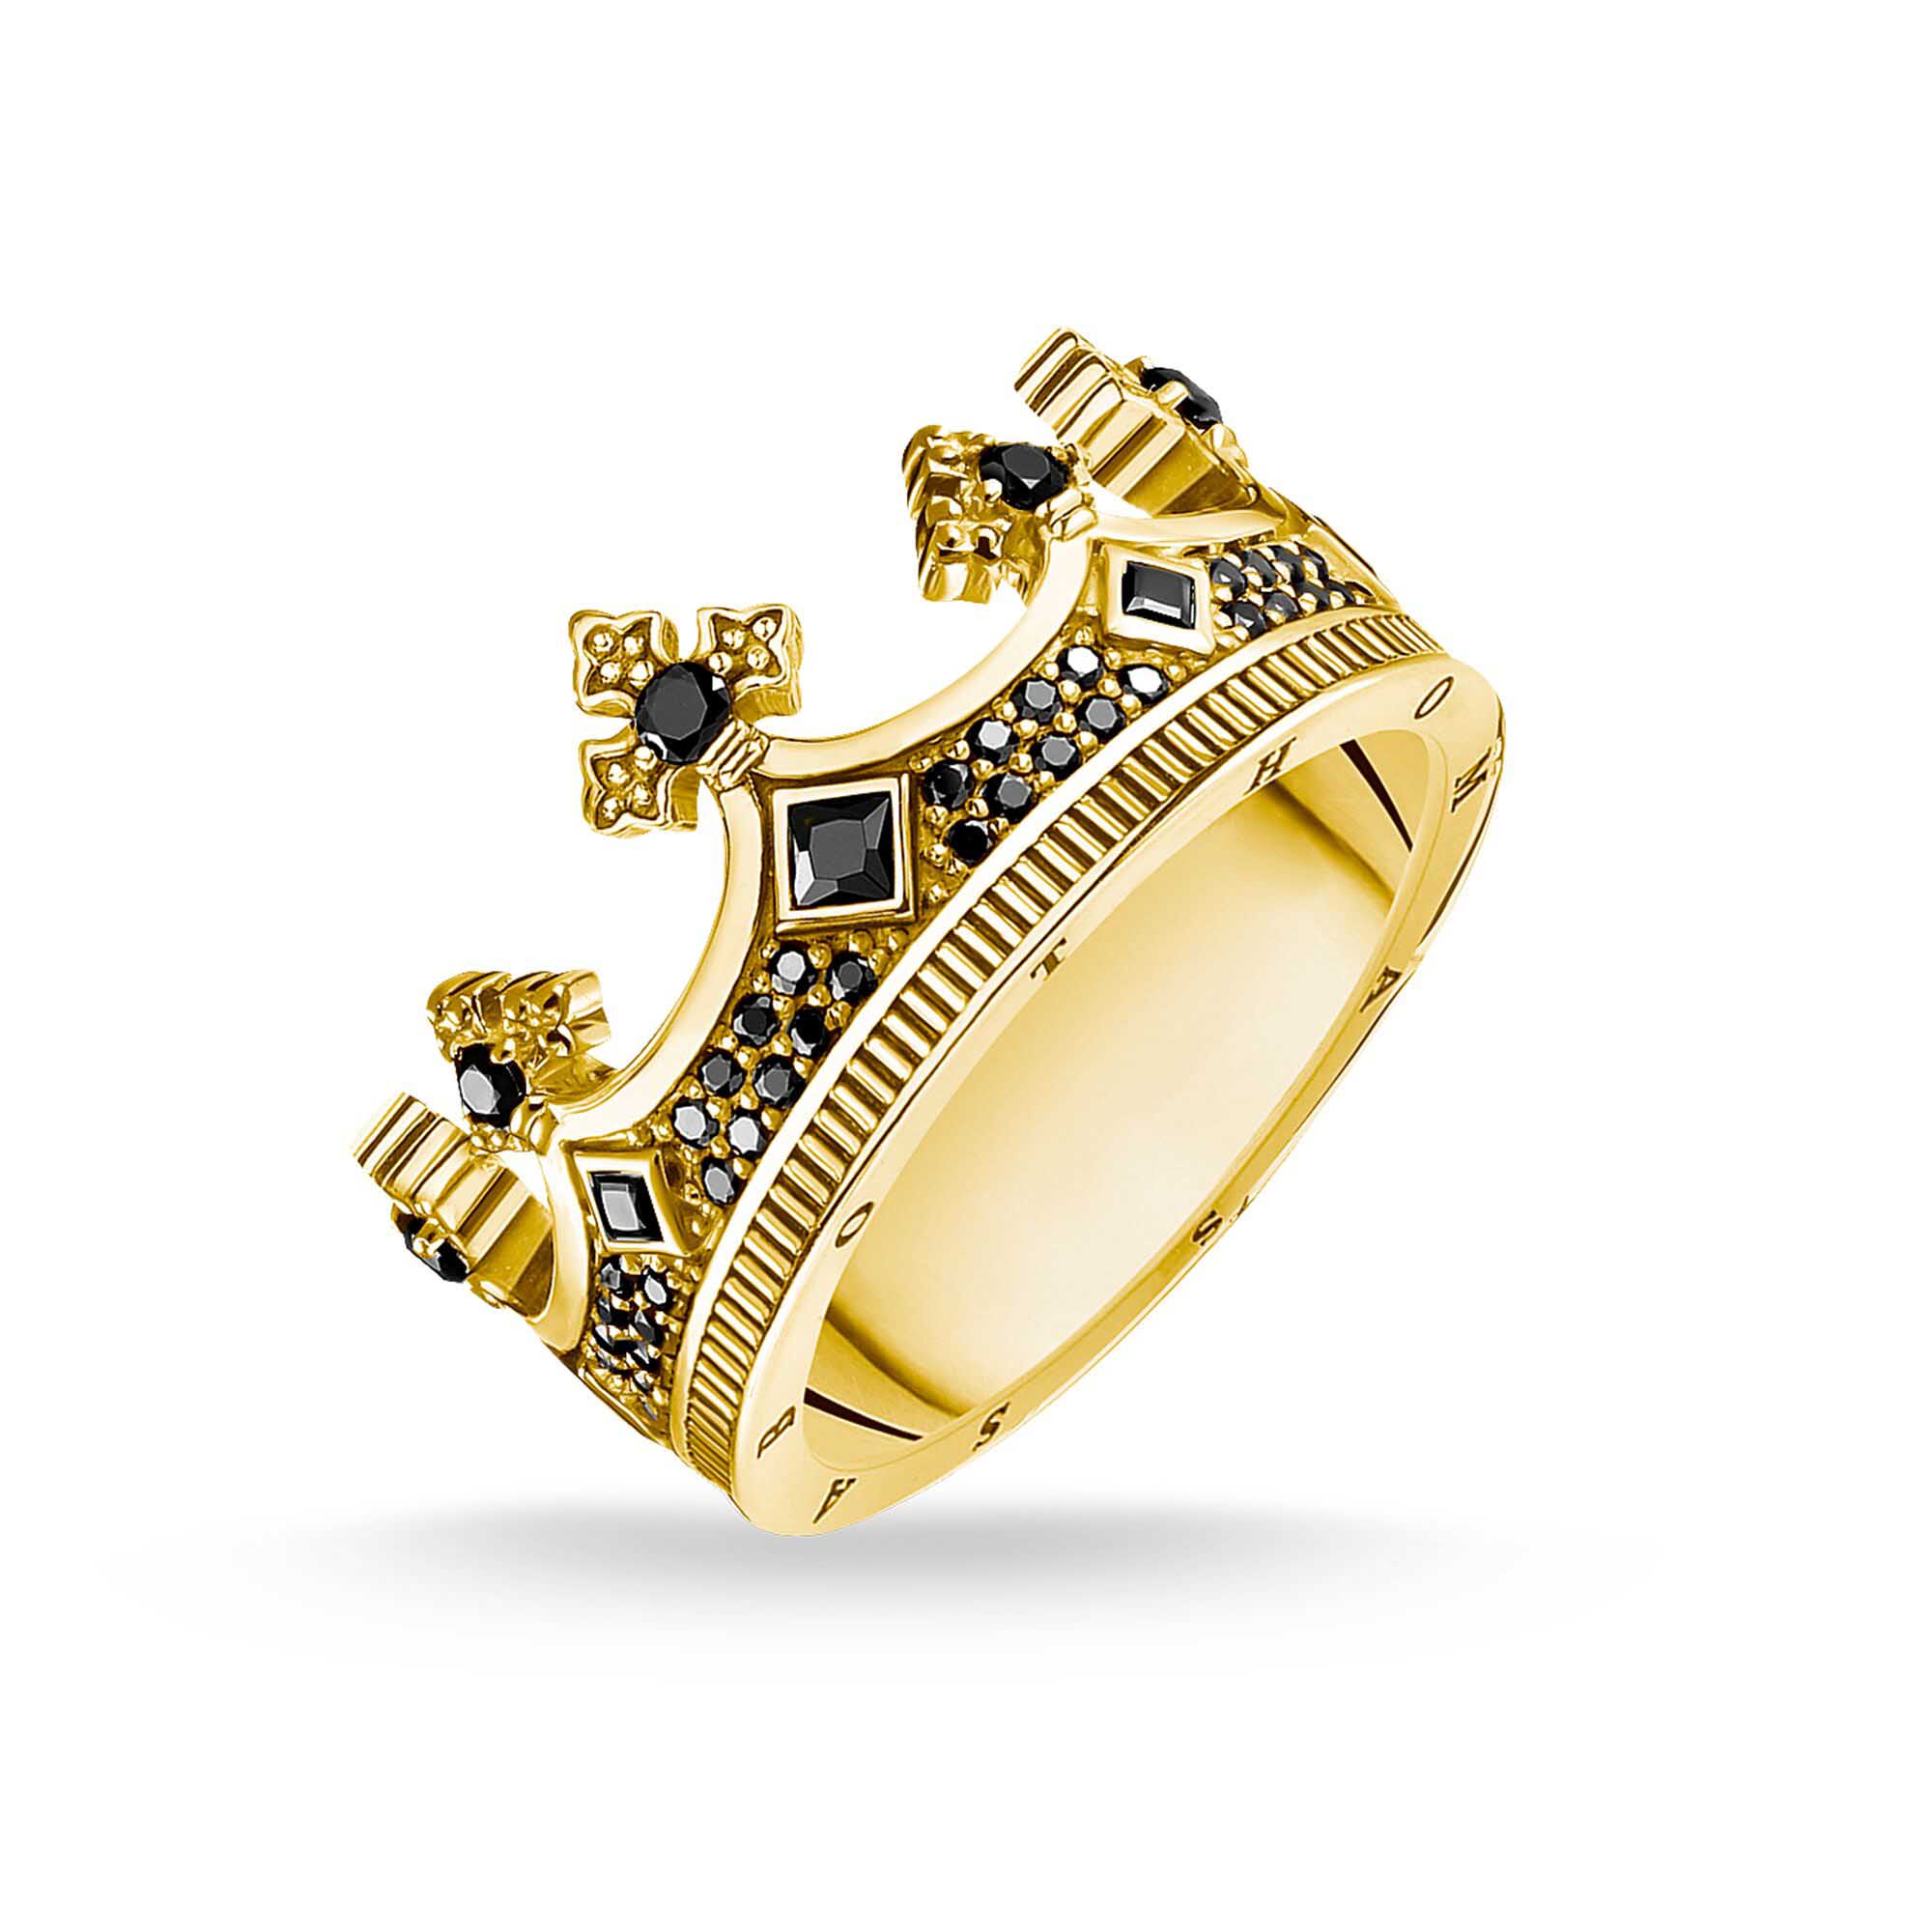 Bague couronne personnalisée en gros avec bijoux OEM/ODM en zircone et fabricant de bijoux plaqué or jaune